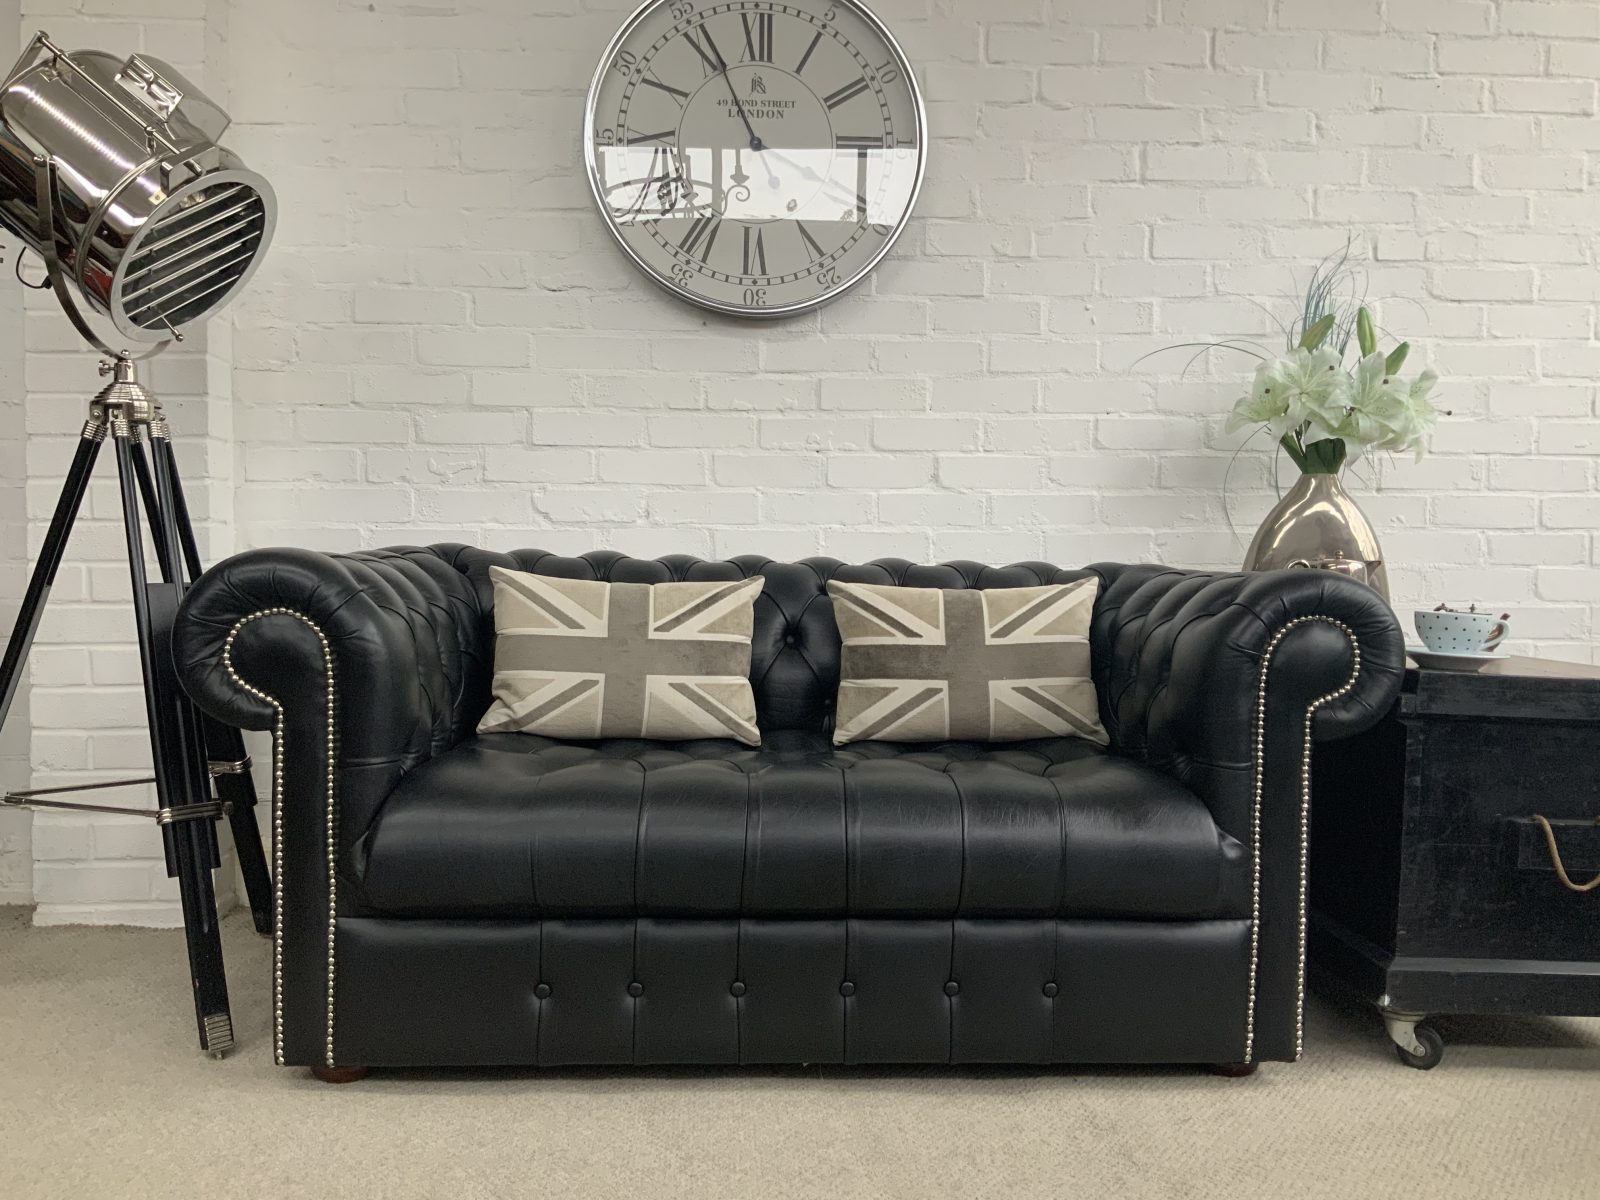 Classic Black 2 Seater Chesterfield Sofa.